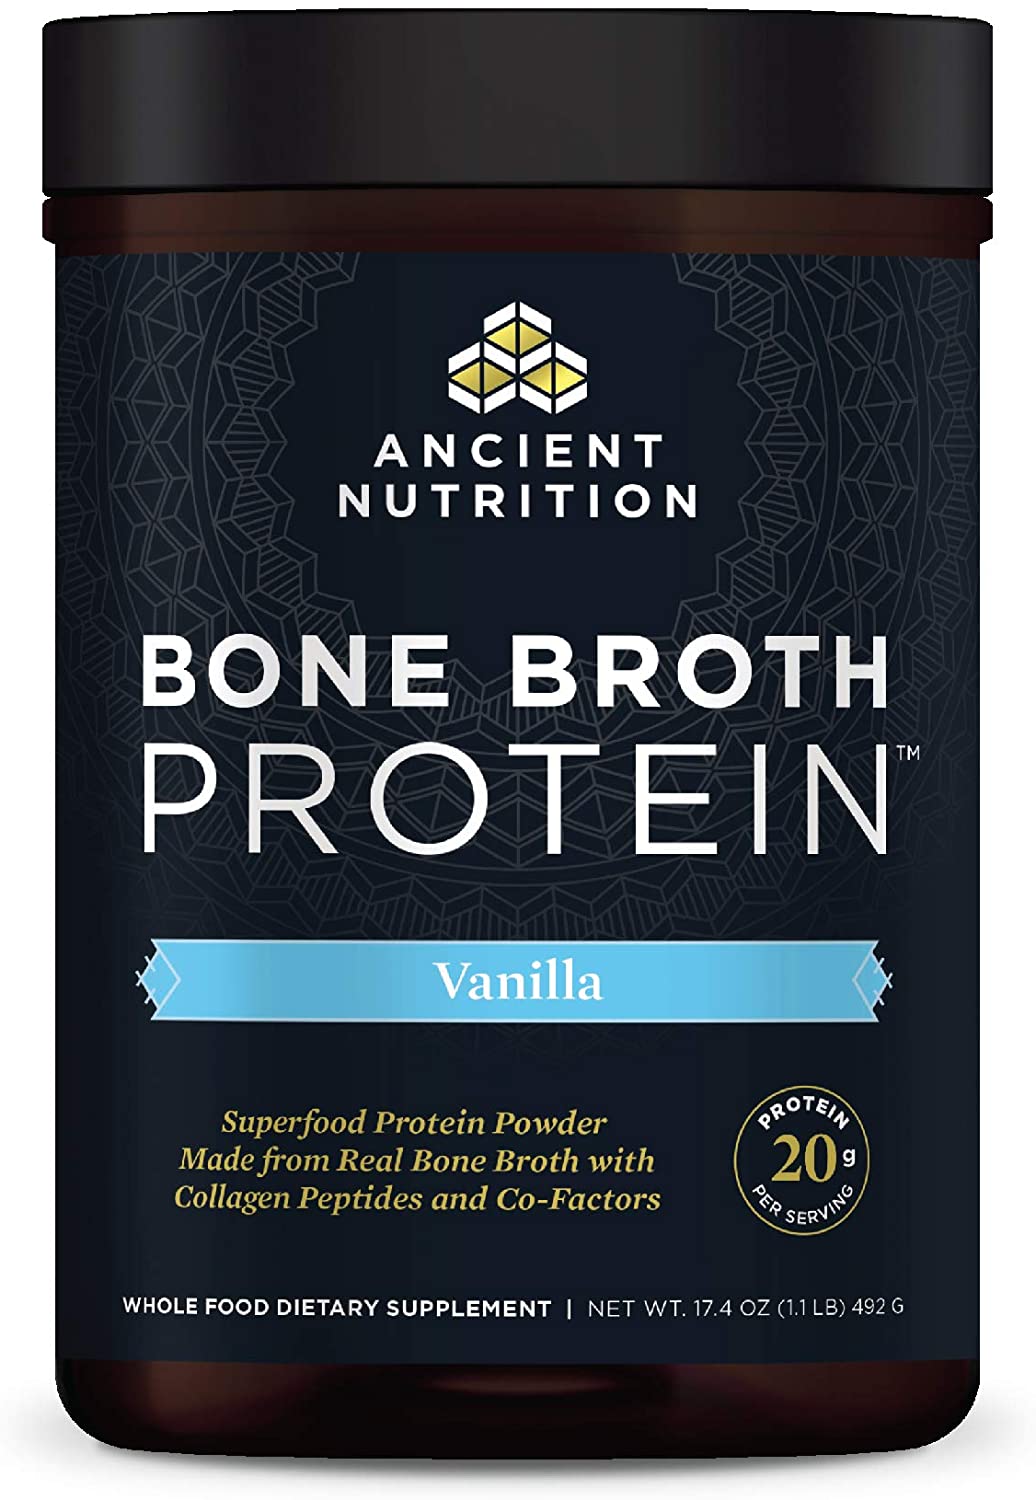 Ancient Nutrition Superfood Bone Broth Protein Powder